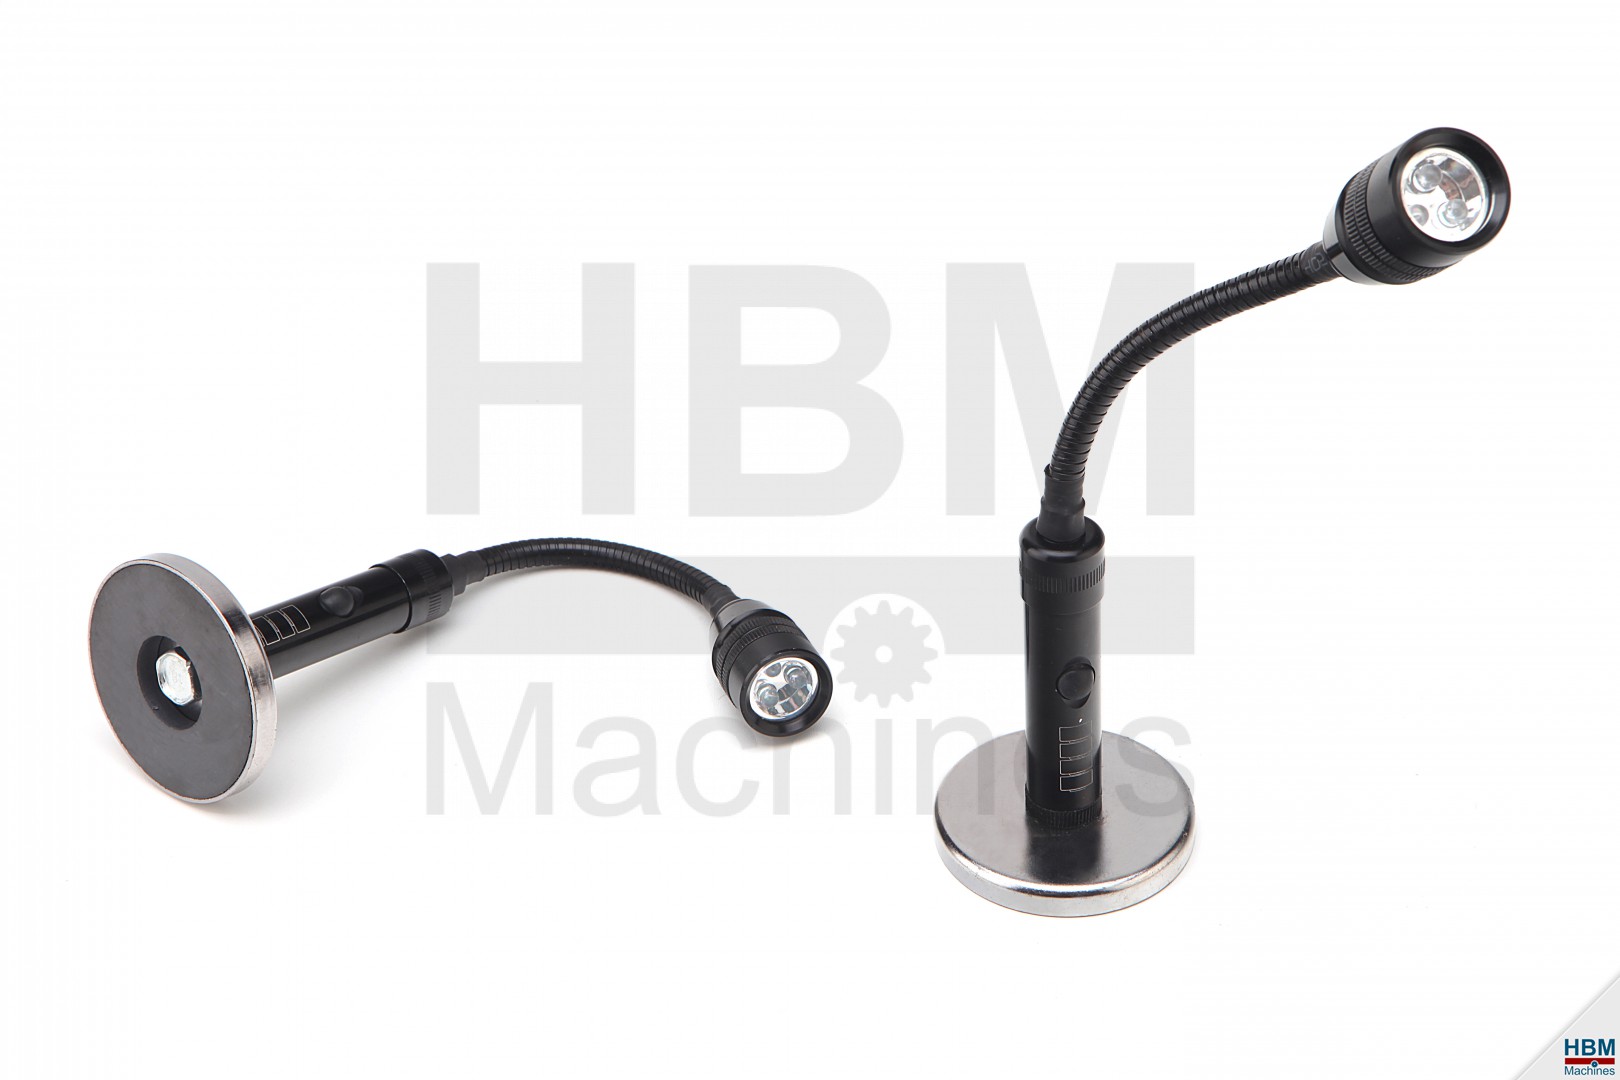 fles stuiten op Opschudding HBM LED Lamp op magneet voet | HBM Machines